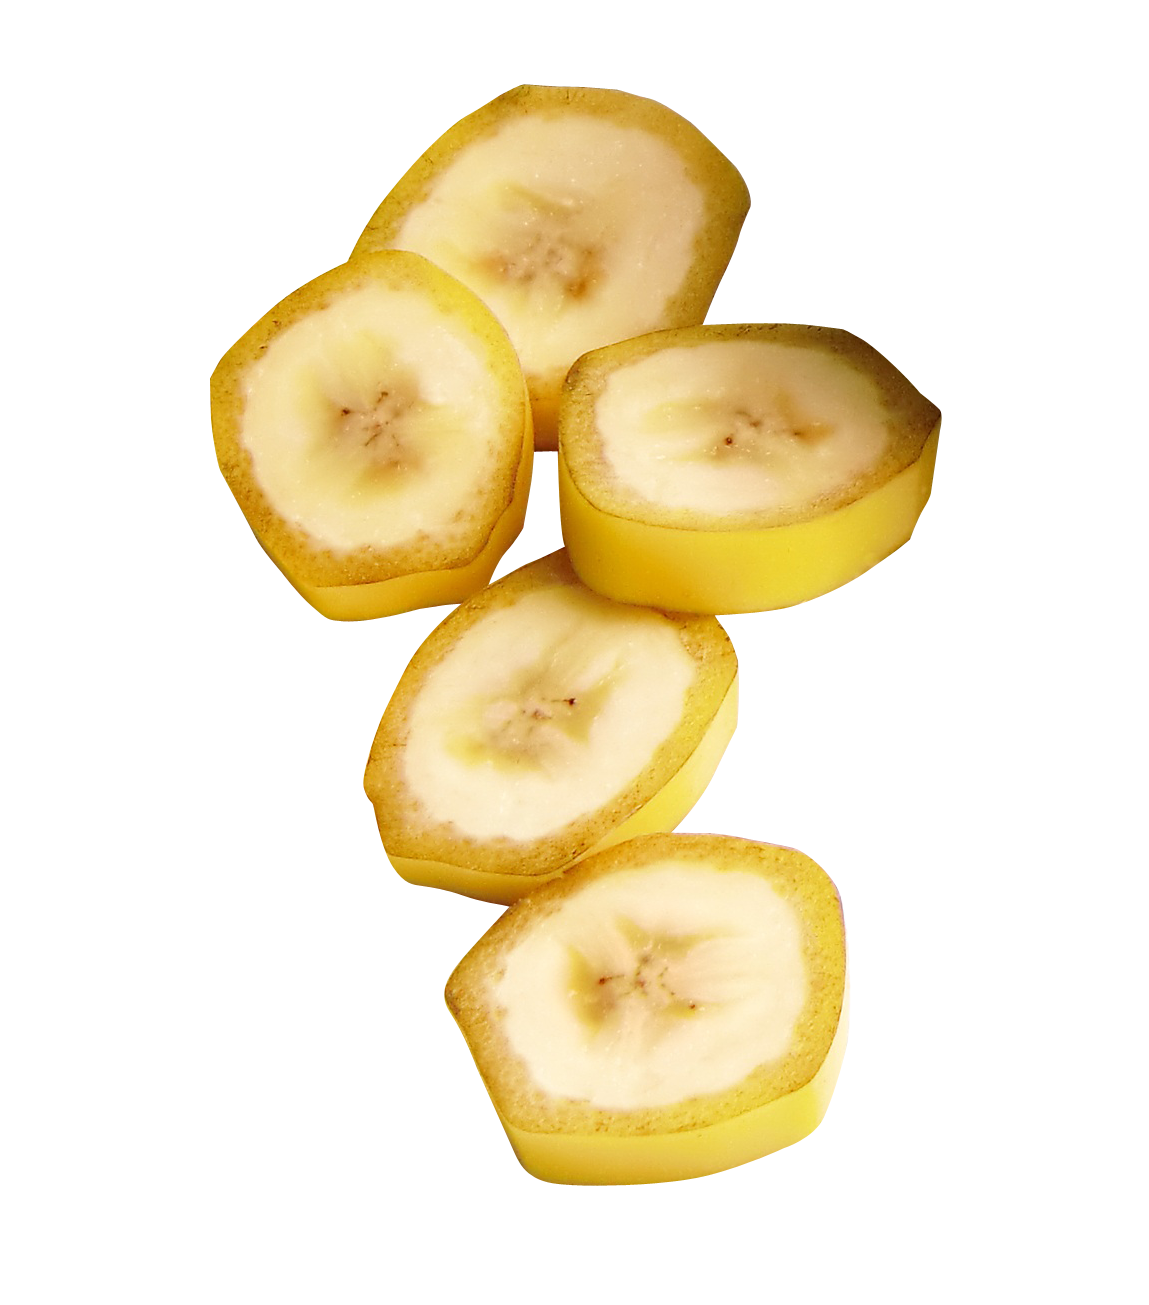 Banana sliced banana